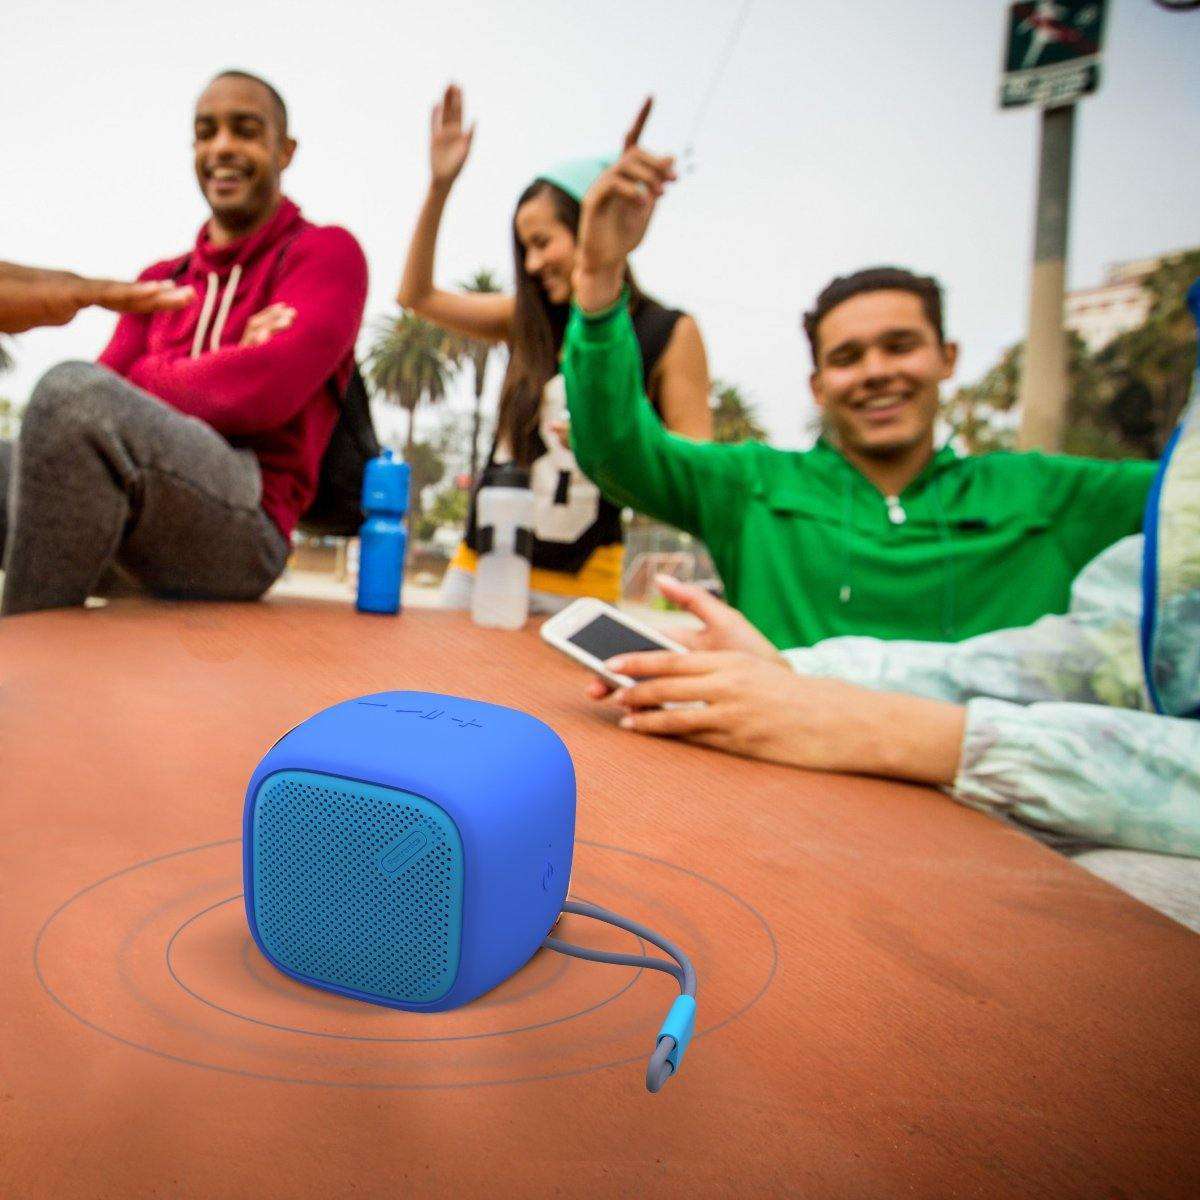 Portronics Sound Drum Bluetooth Speaker Portable With FM & USB